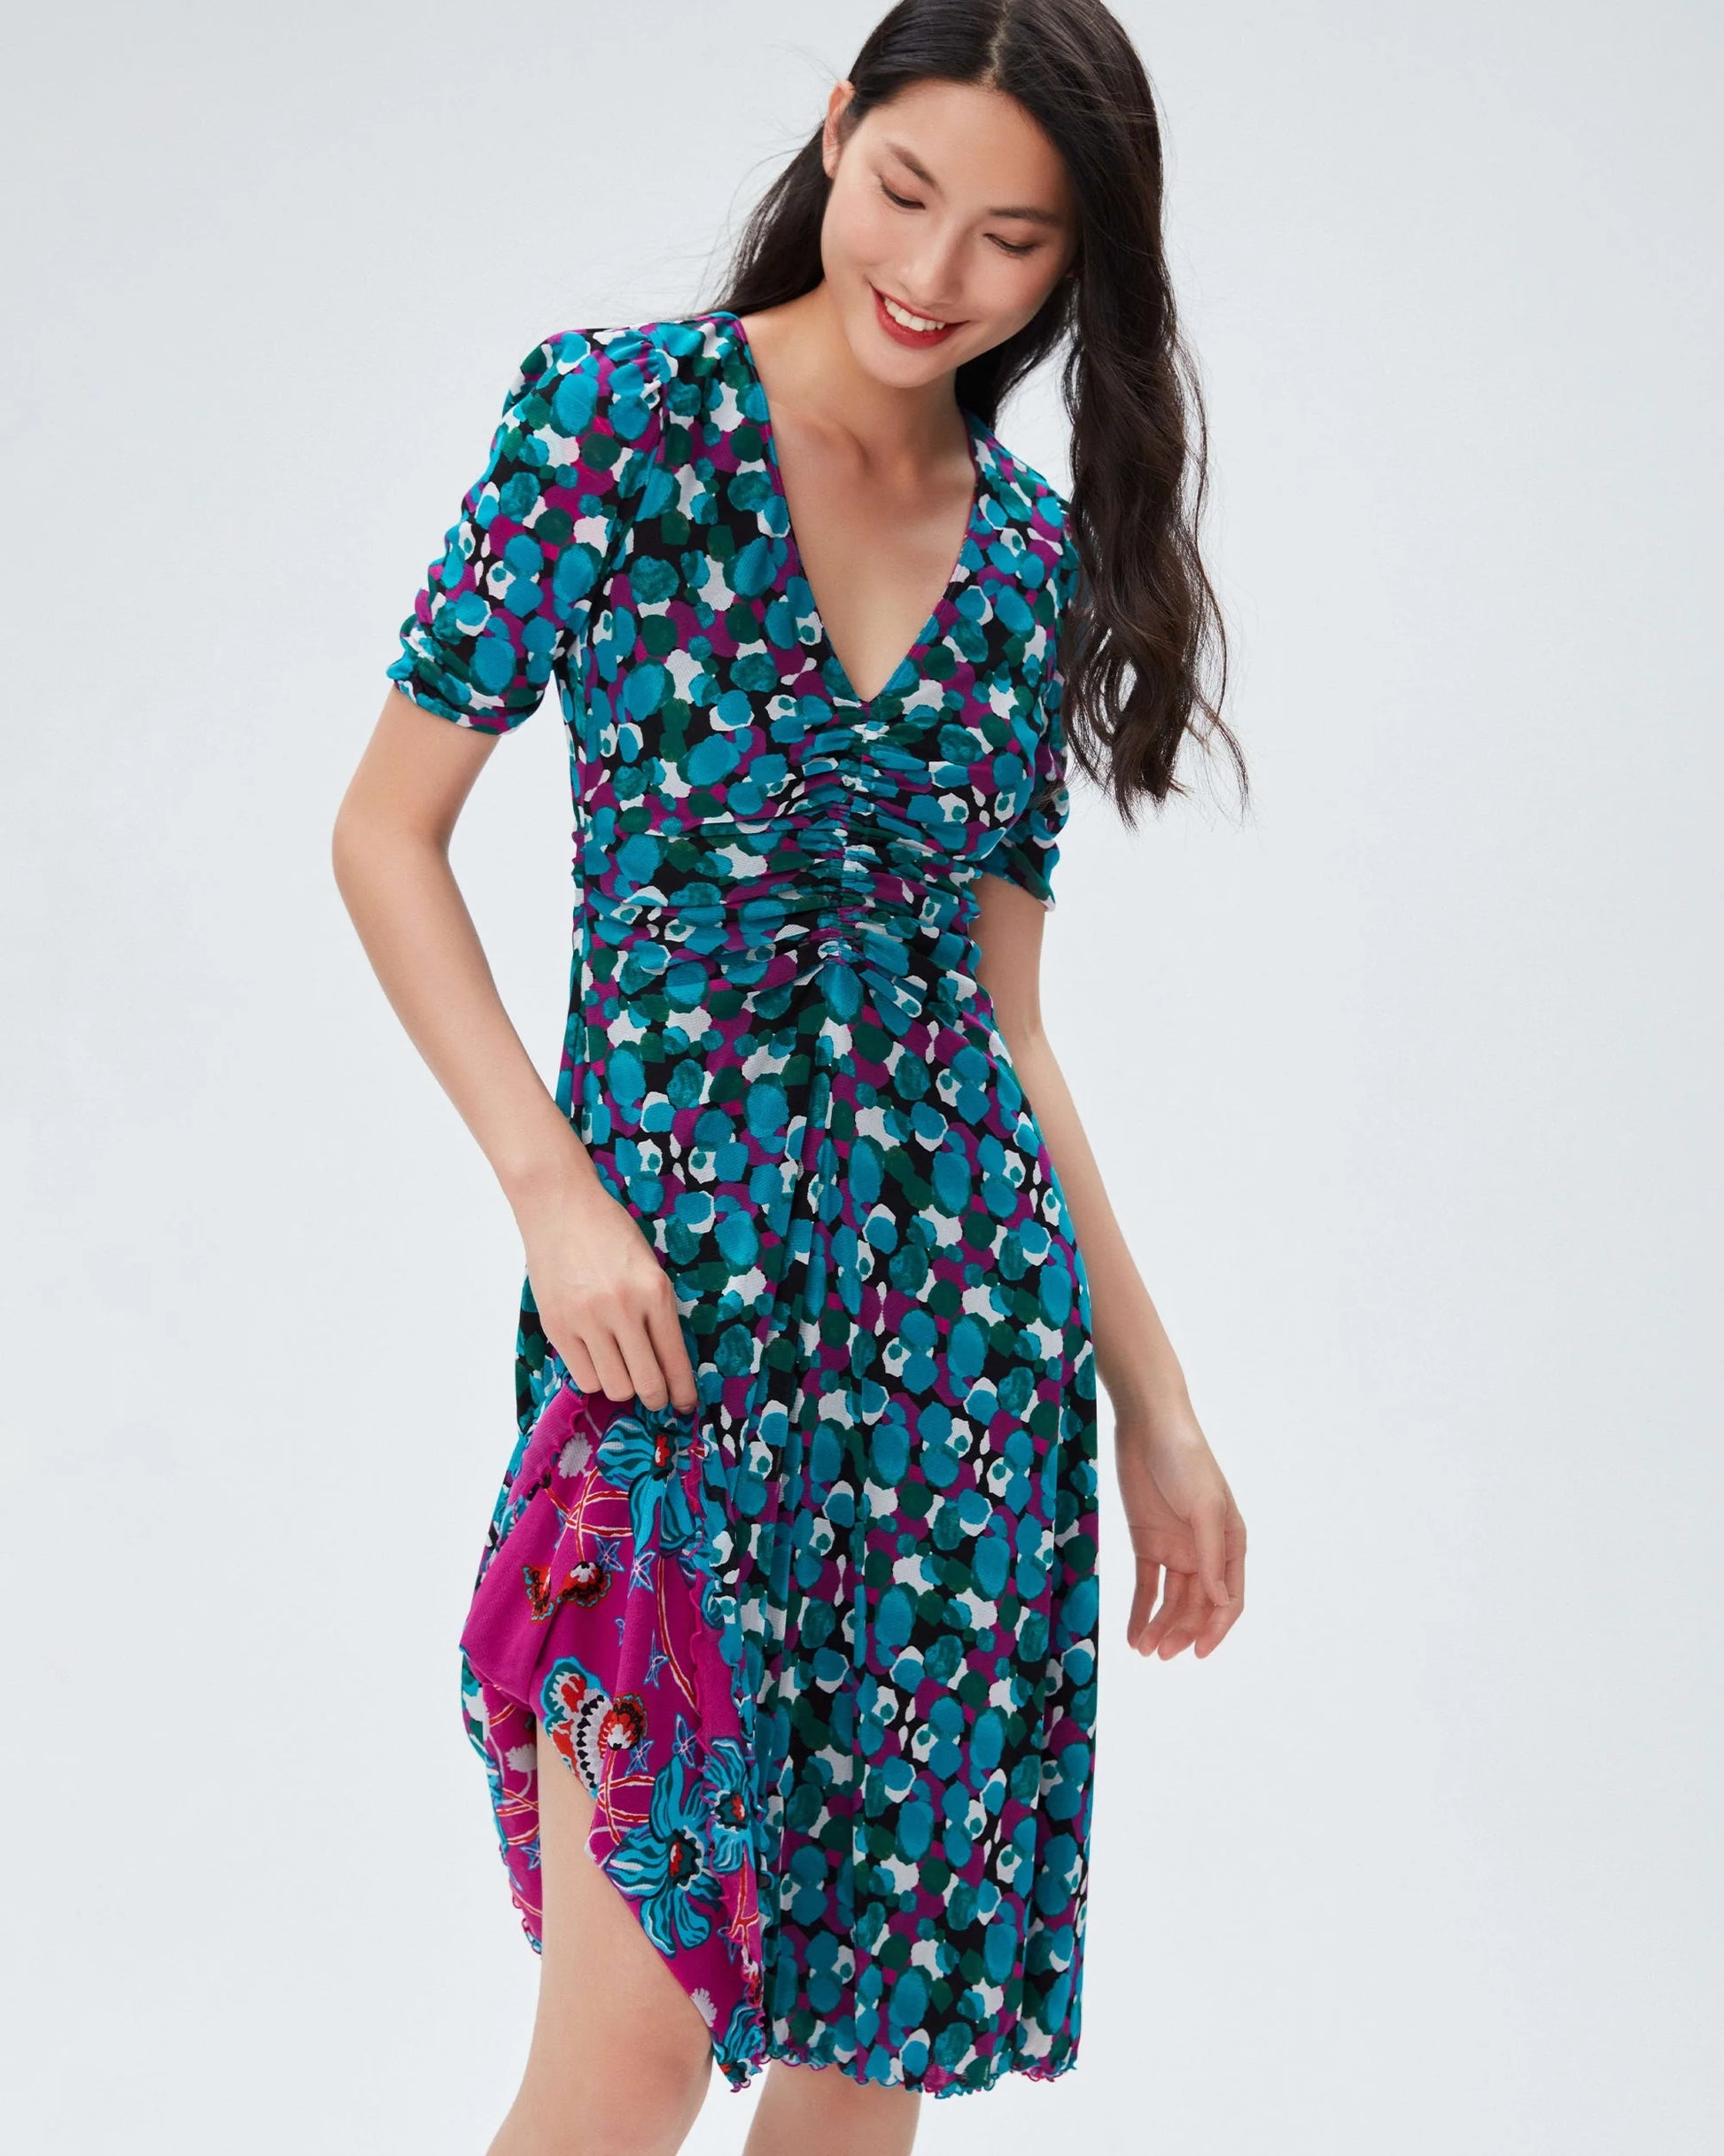 Diane Furstenberg - Koren Reversible Dress Tiny Tiger Lily/Leopard Spots Pool Party – Jackie Z Style Co.